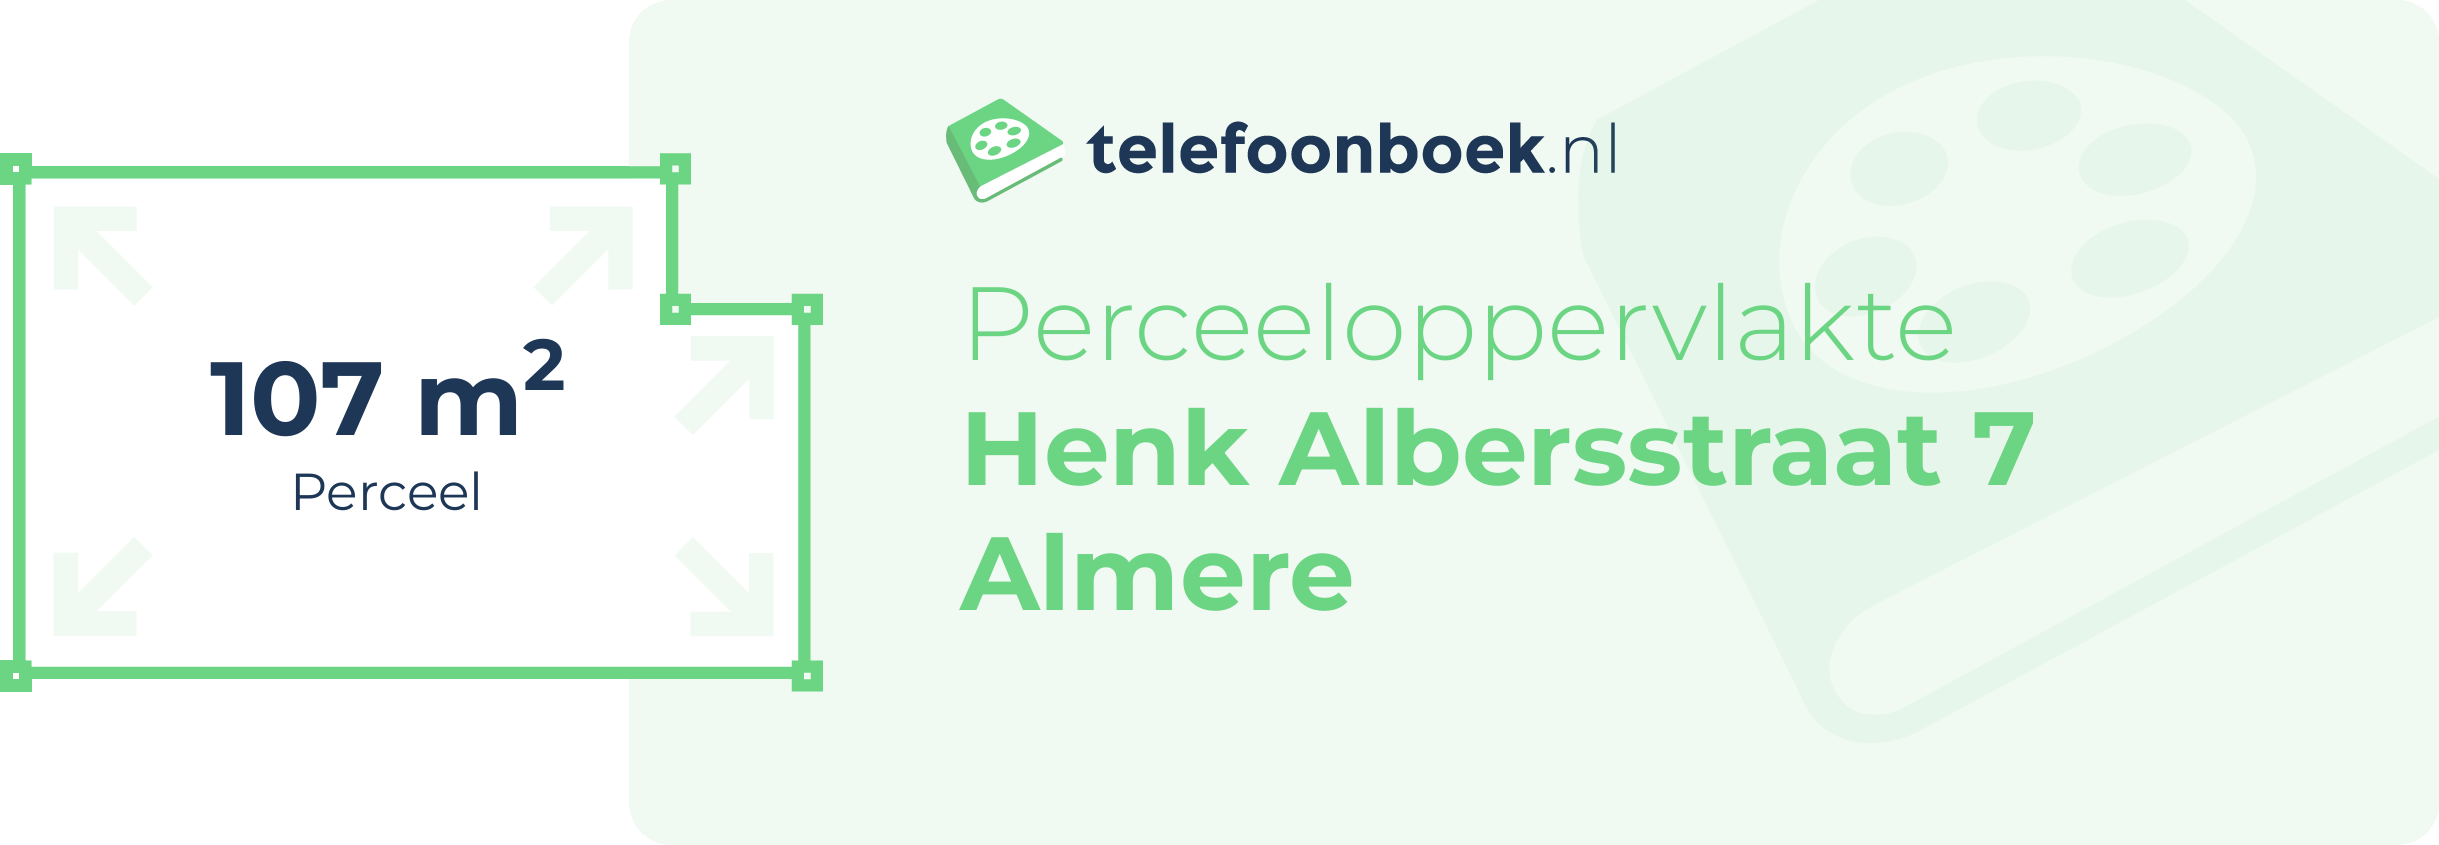 Perceeloppervlakte Henk Albersstraat 7 Almere